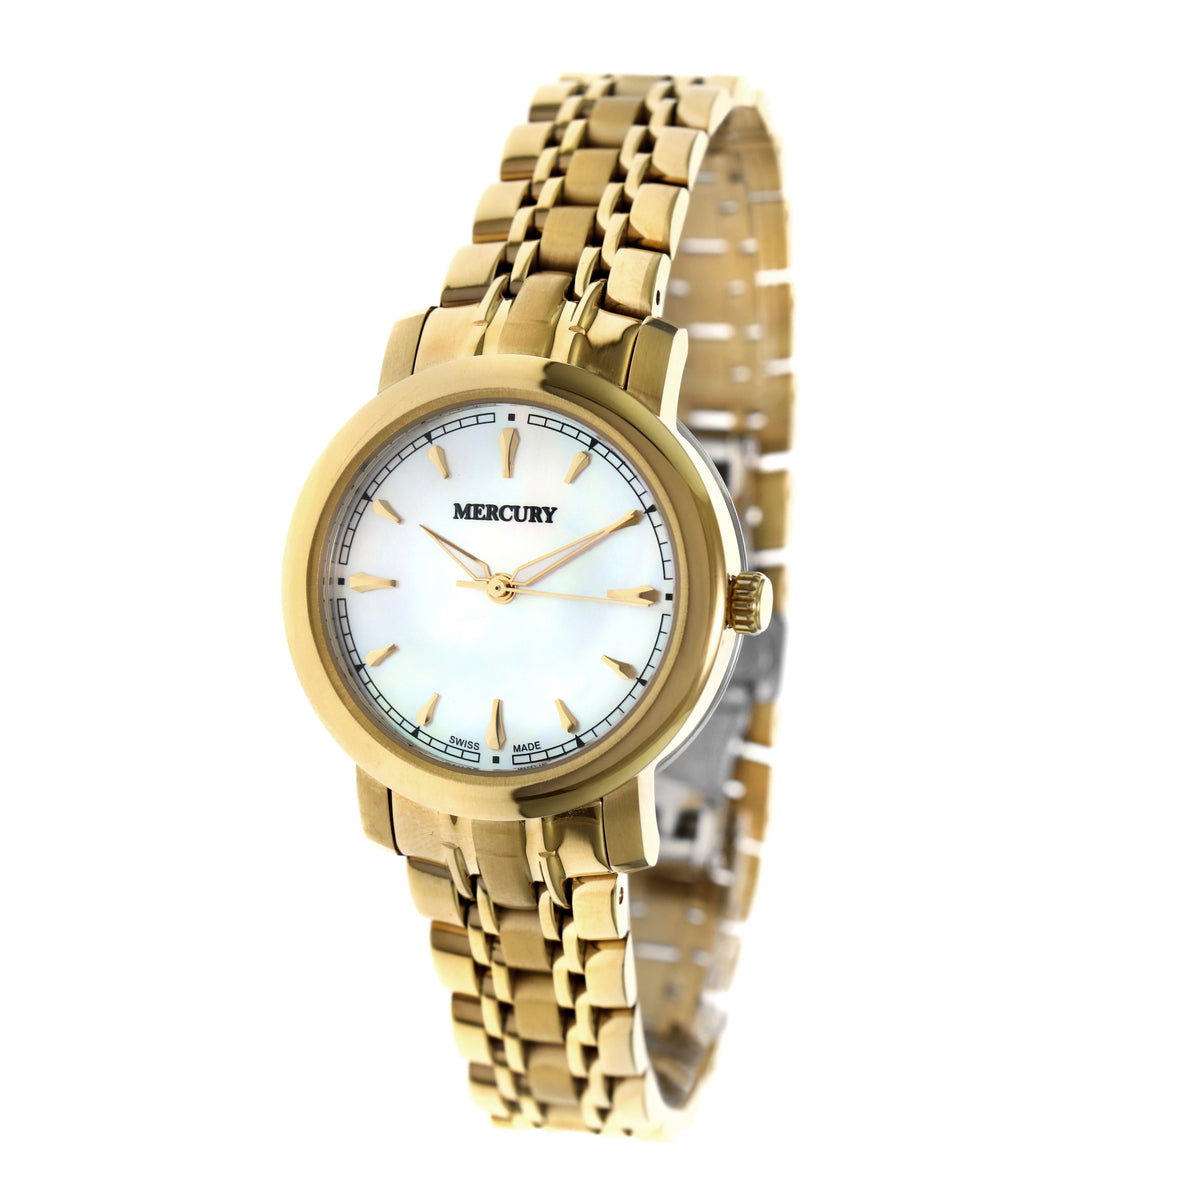 Mercury Women's Swiss Quartz Watch with Pearly White Dial - MER-0003